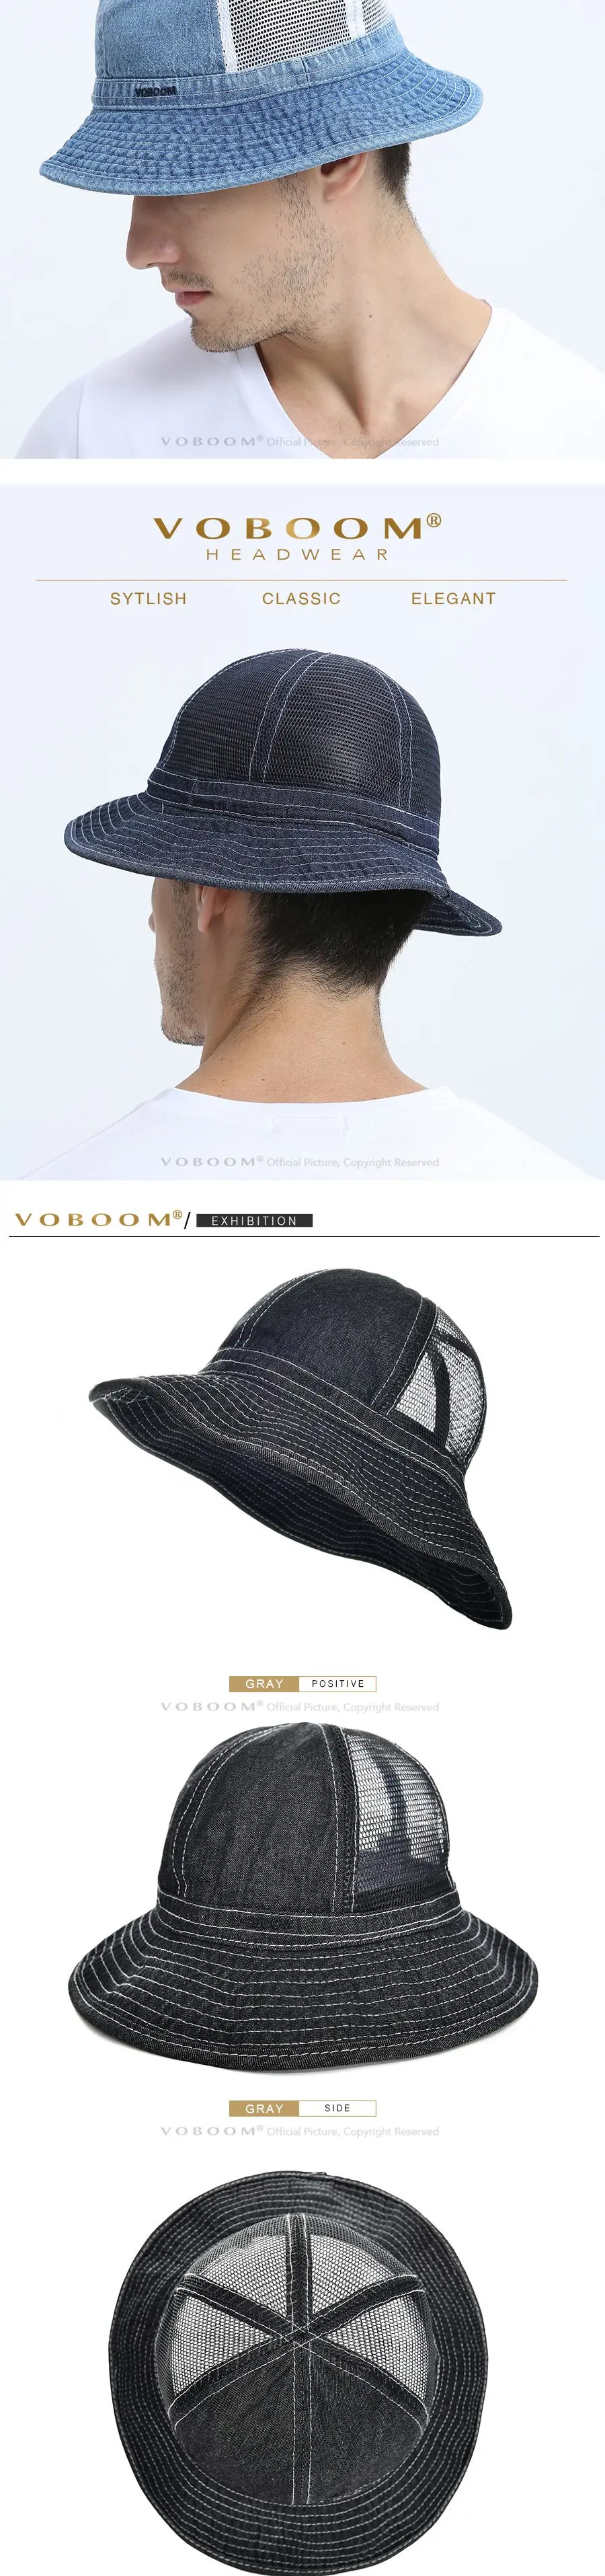 VOBOOM Летняя мужская шляпа-Панама с широкими полями, Солнцезащитная рыболовная Кепка, рыбацкие шапки, камуфляжная уличная сетчатая Кепка s 135